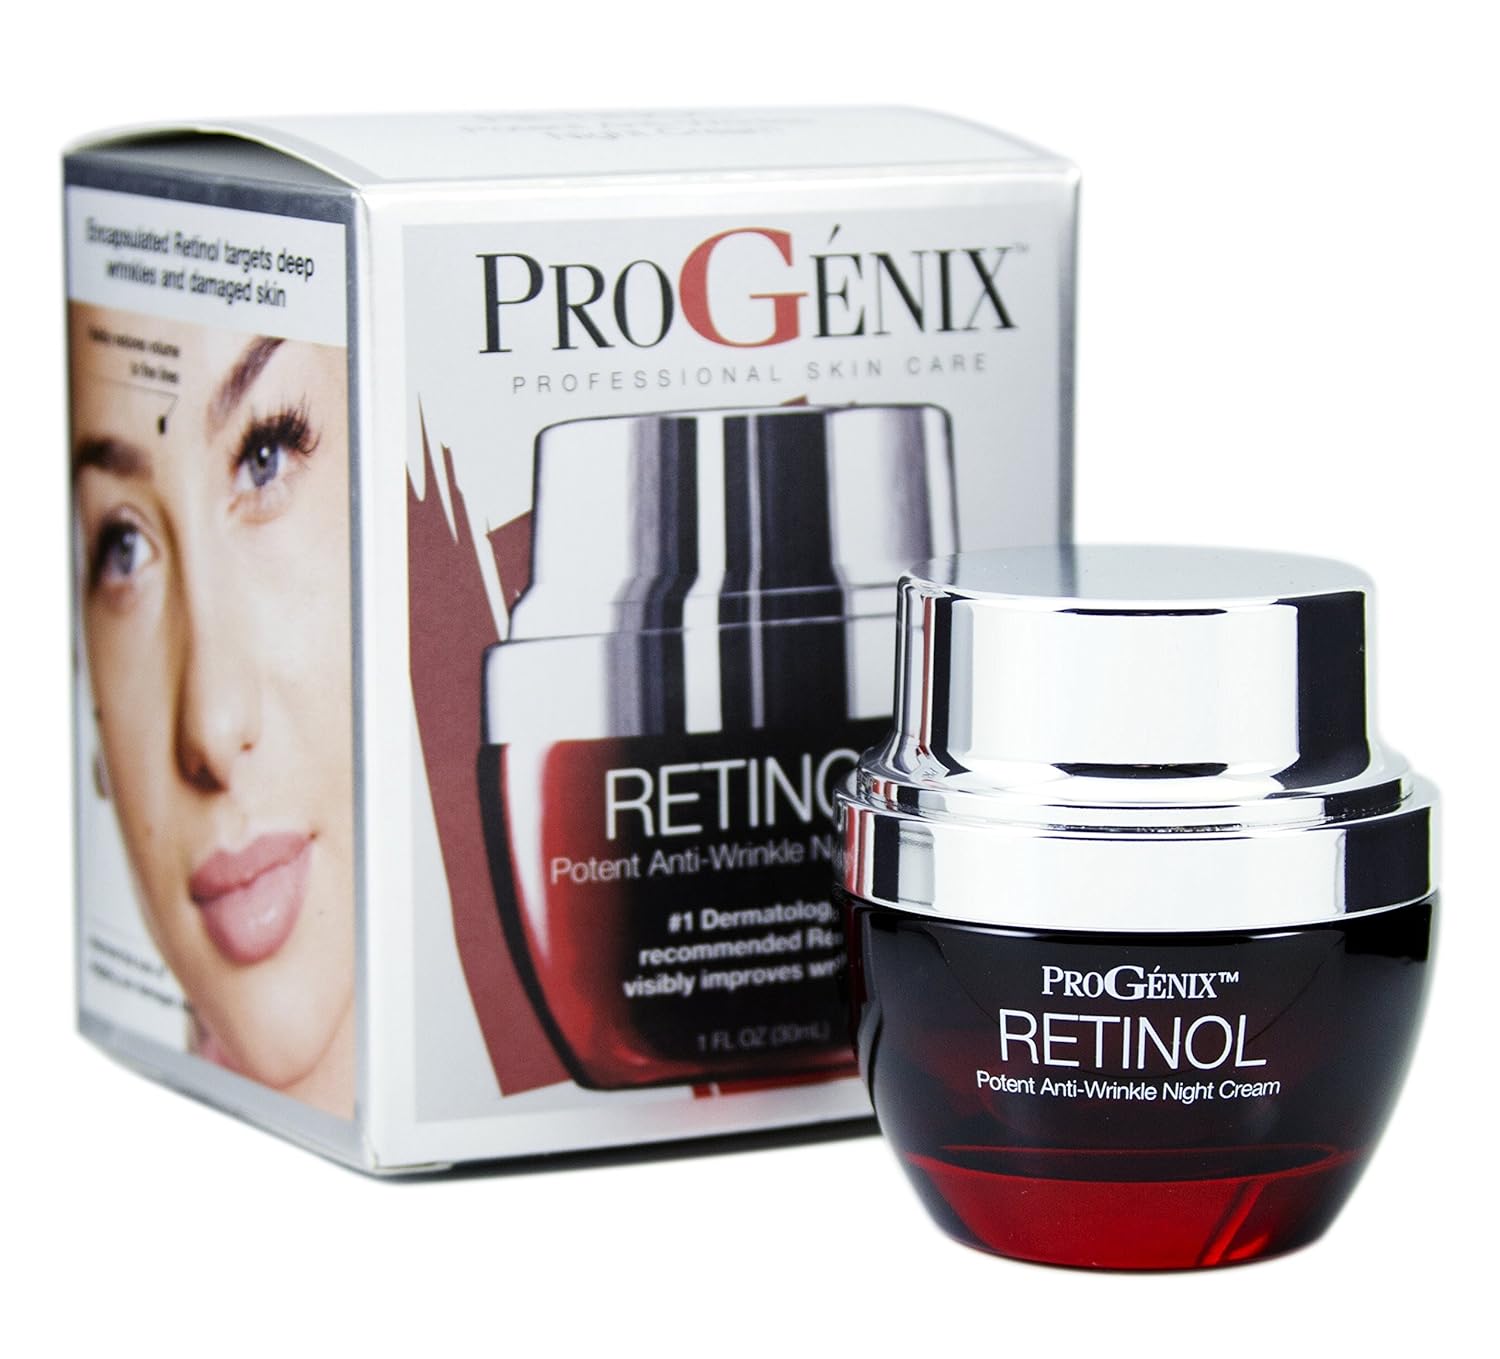 Progenix Profesional Retinol Face Cream Moisturizer Facial Lotion Helps Diminish Wrinkles, Crepey Skin, & Age Spots, Fragrance Free Anti Aging Skin Care Retinol Lotion For Face, 1